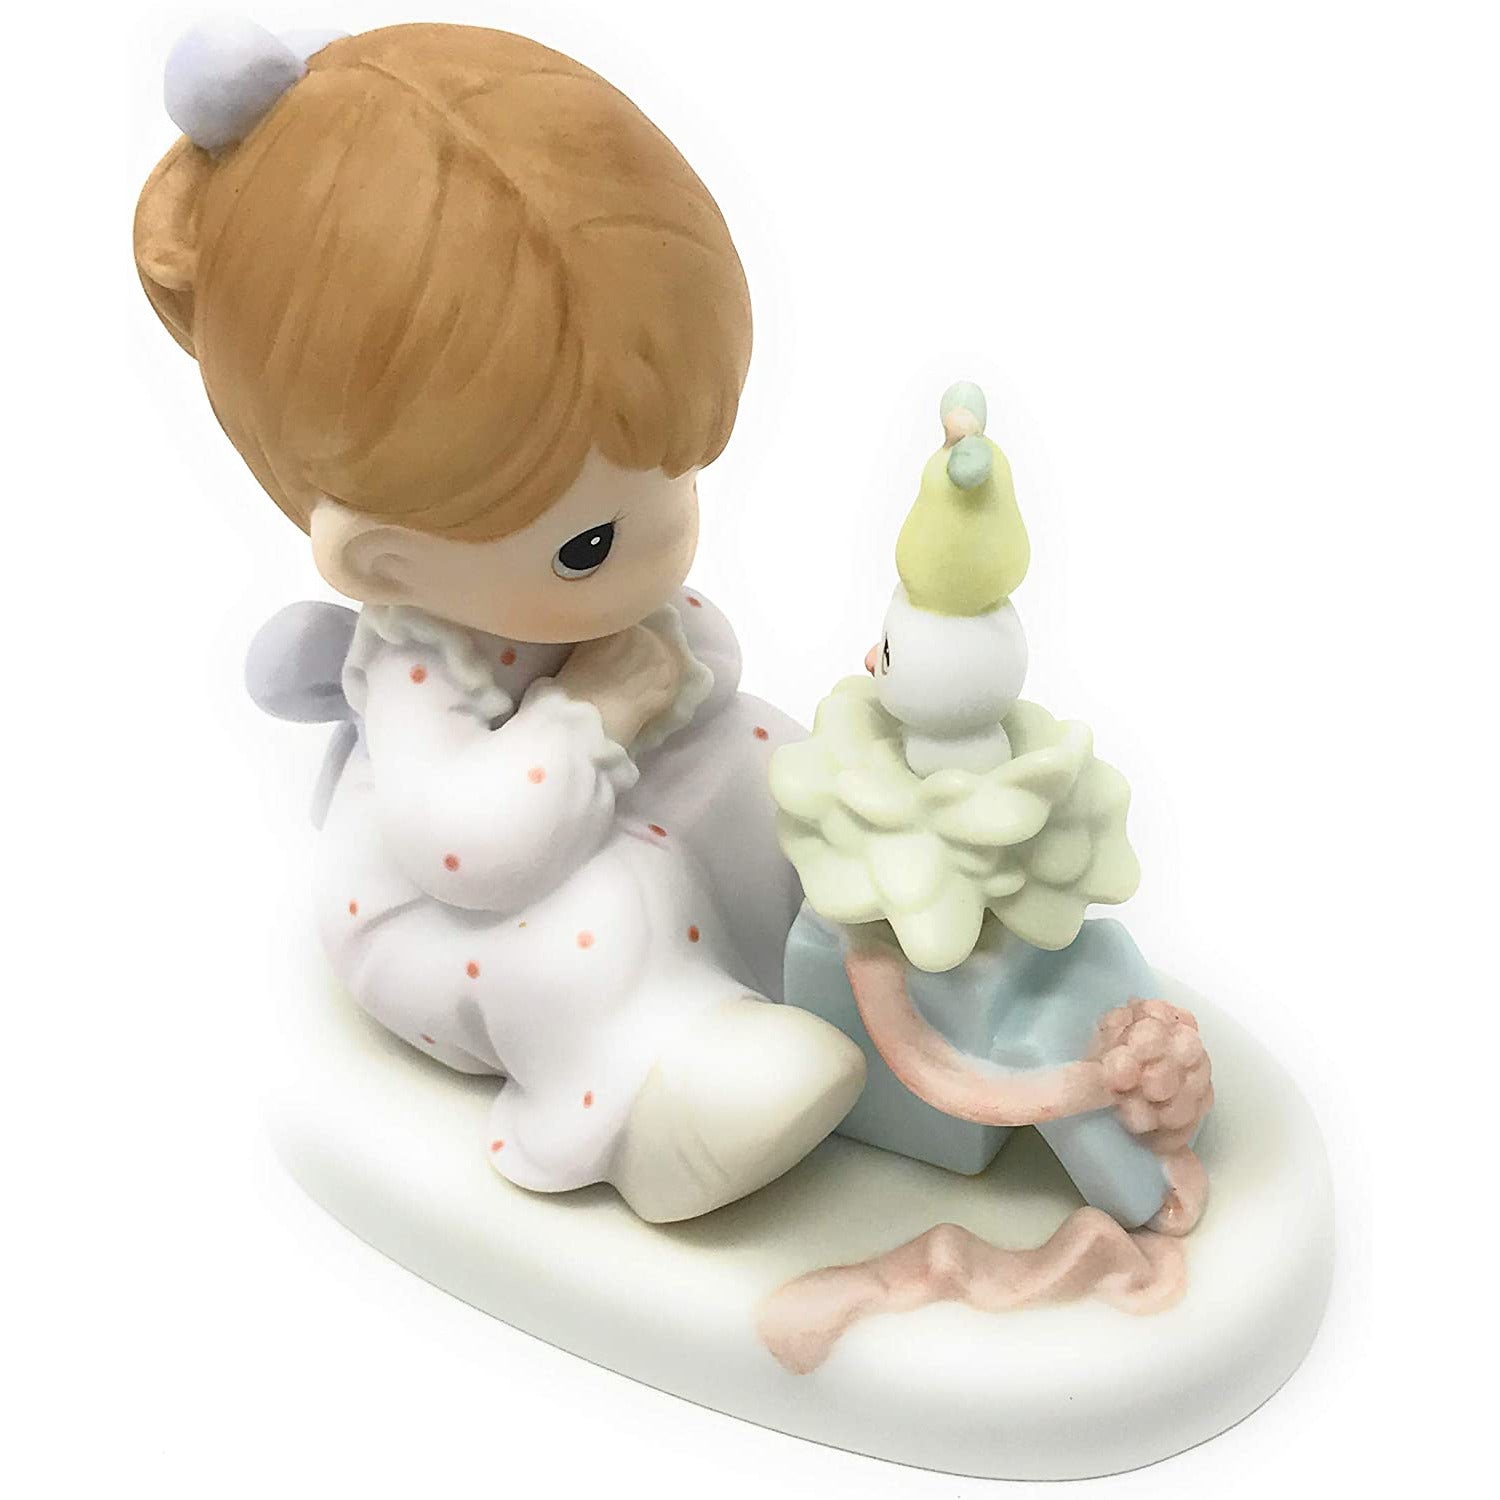 Precious Moments "My True Love Gave To Me" Porcelain Figurine